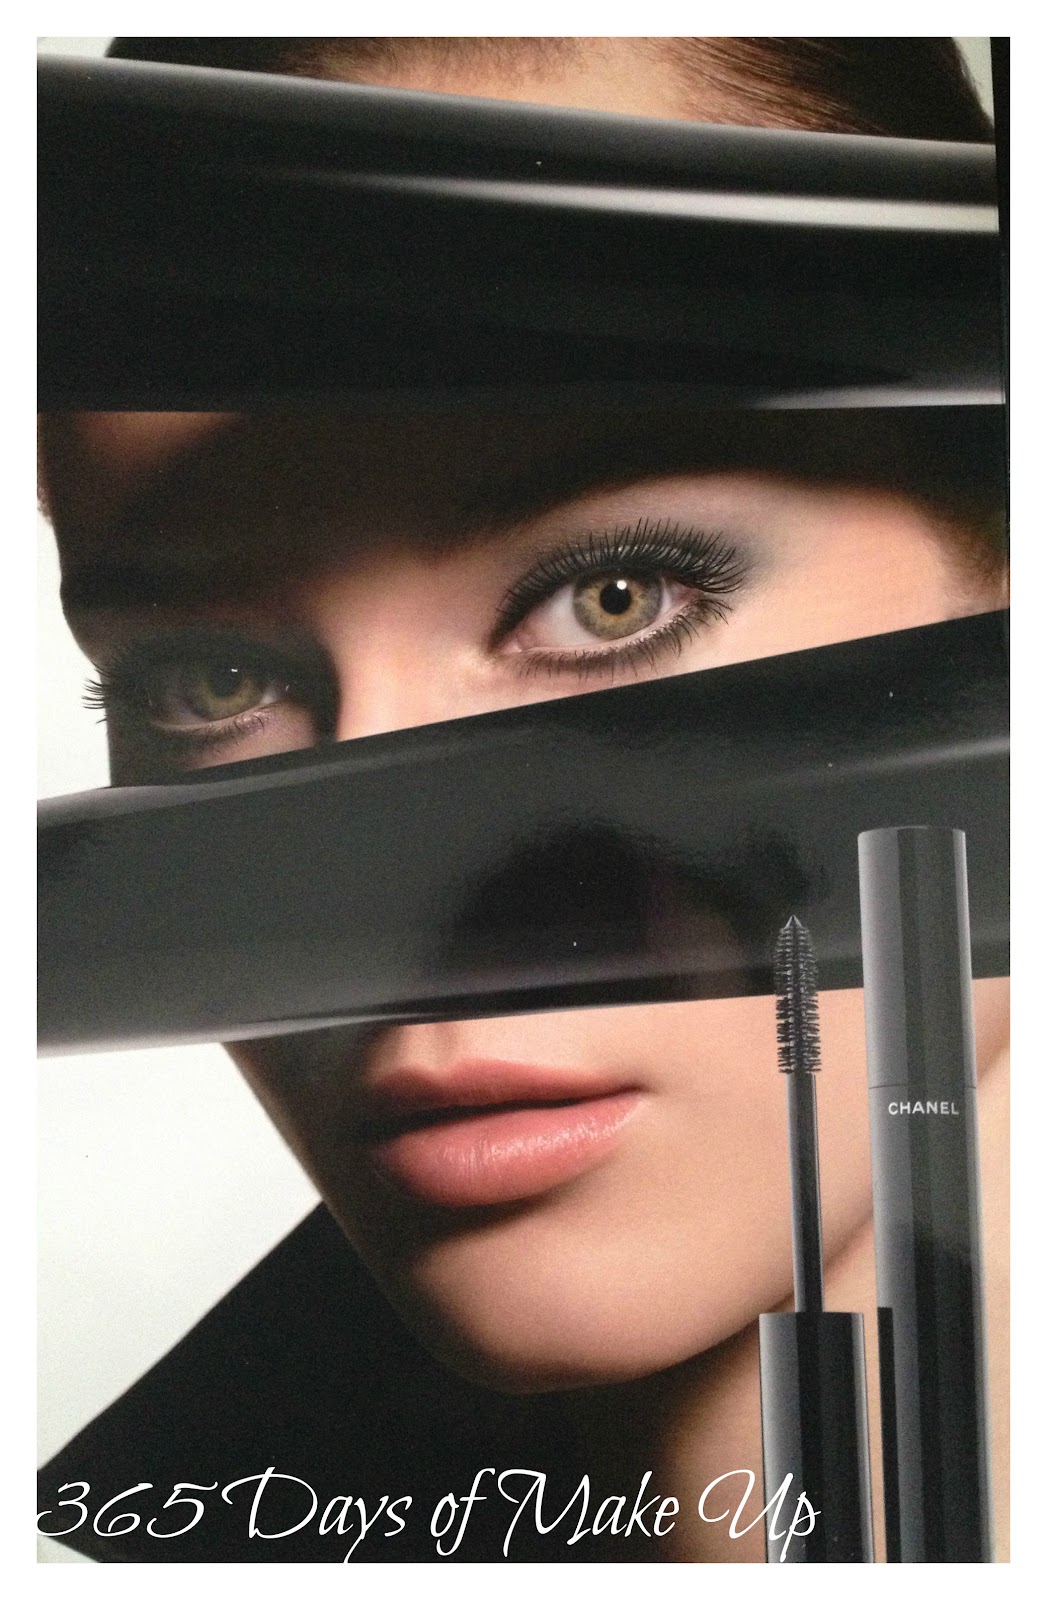 Le Volume De Chanel Mascara Review –